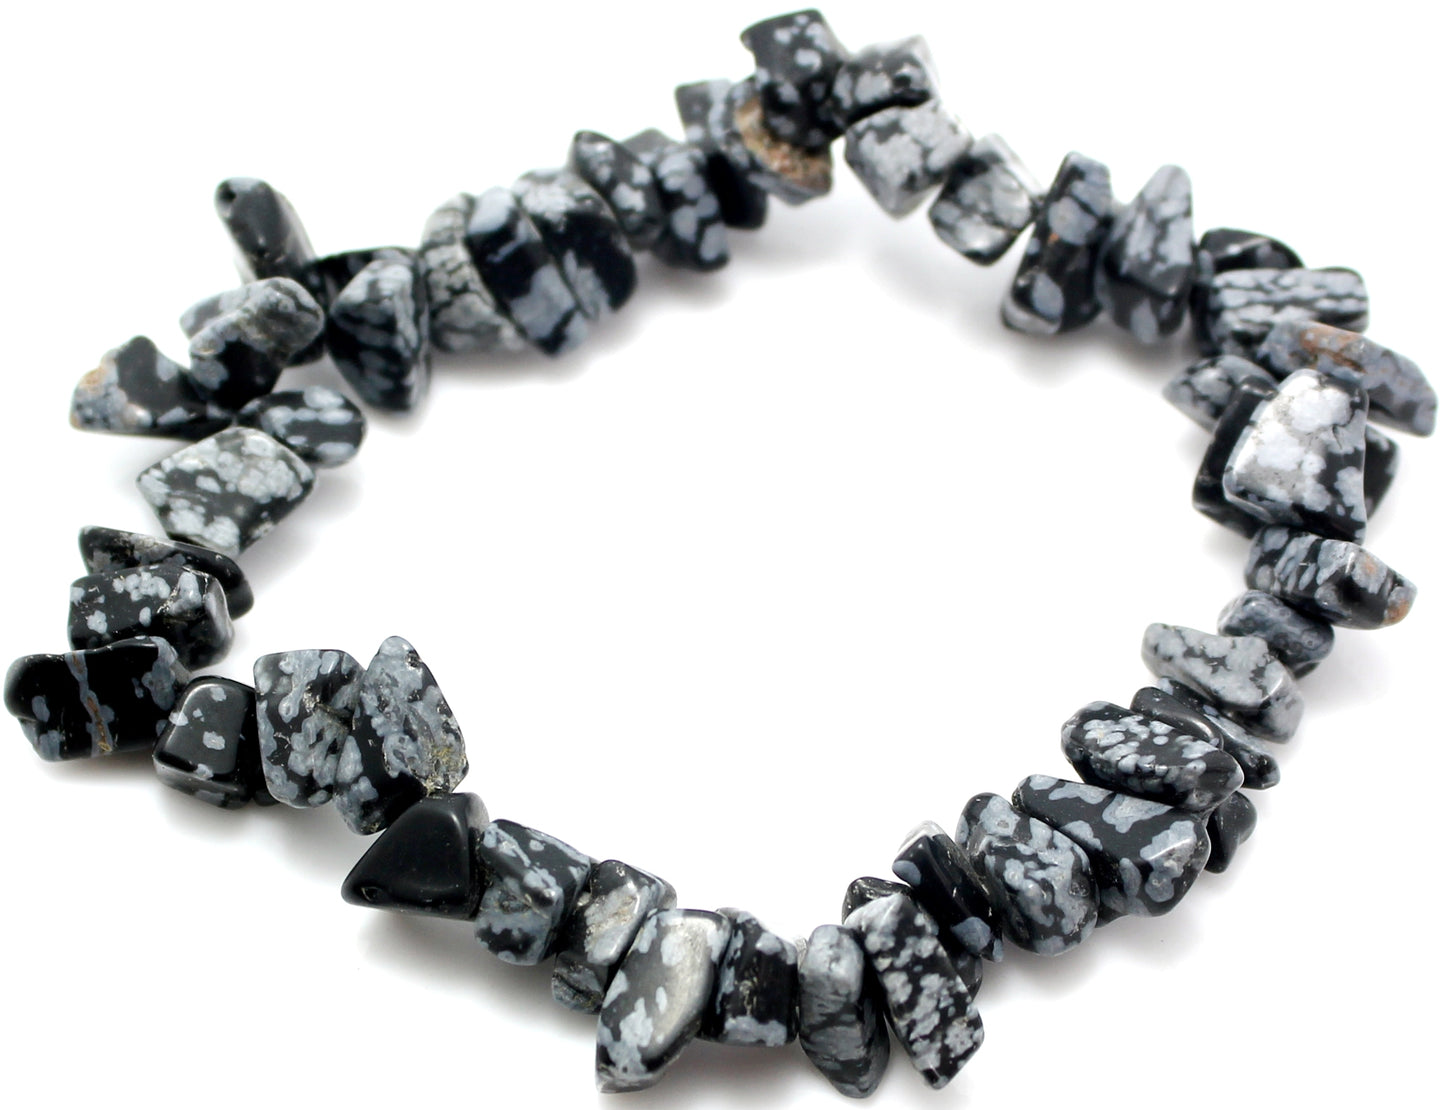 Snowflake obsidian zodiac bracelet - Rivendell Shop